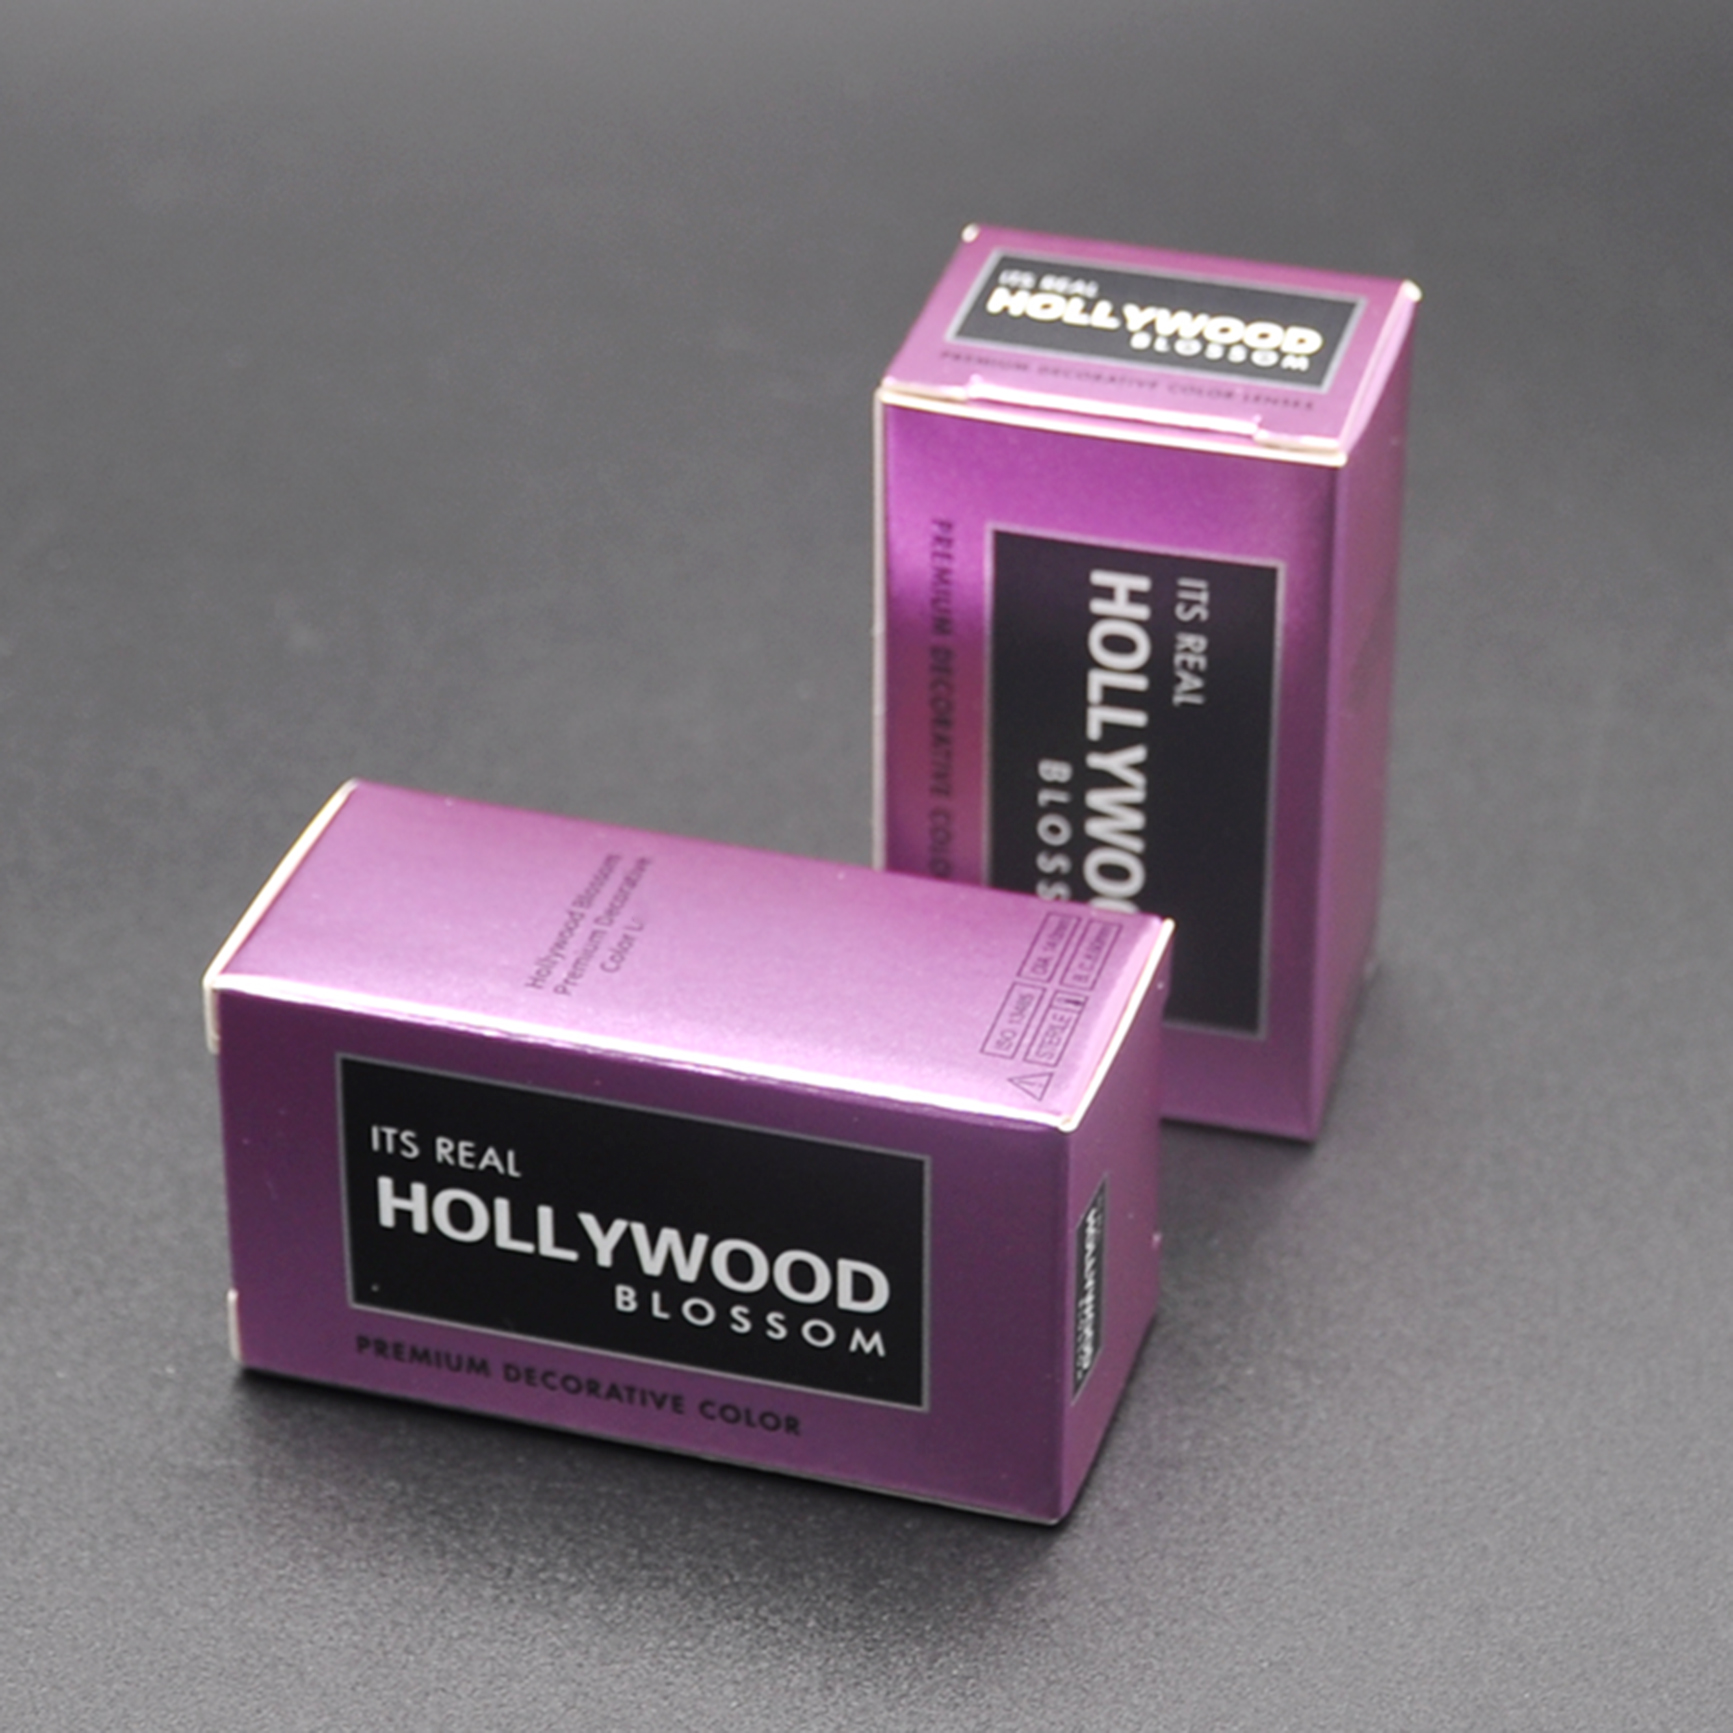 Freeshipping-Großhandels-Shop-Box für Hollywood 20-Farben-Augenkontakt, seine echte Hollywood-Blüte, Kontaktverpackung, mehrere Farben, Verpackungshülle, Lentes de Contacto-Boxen